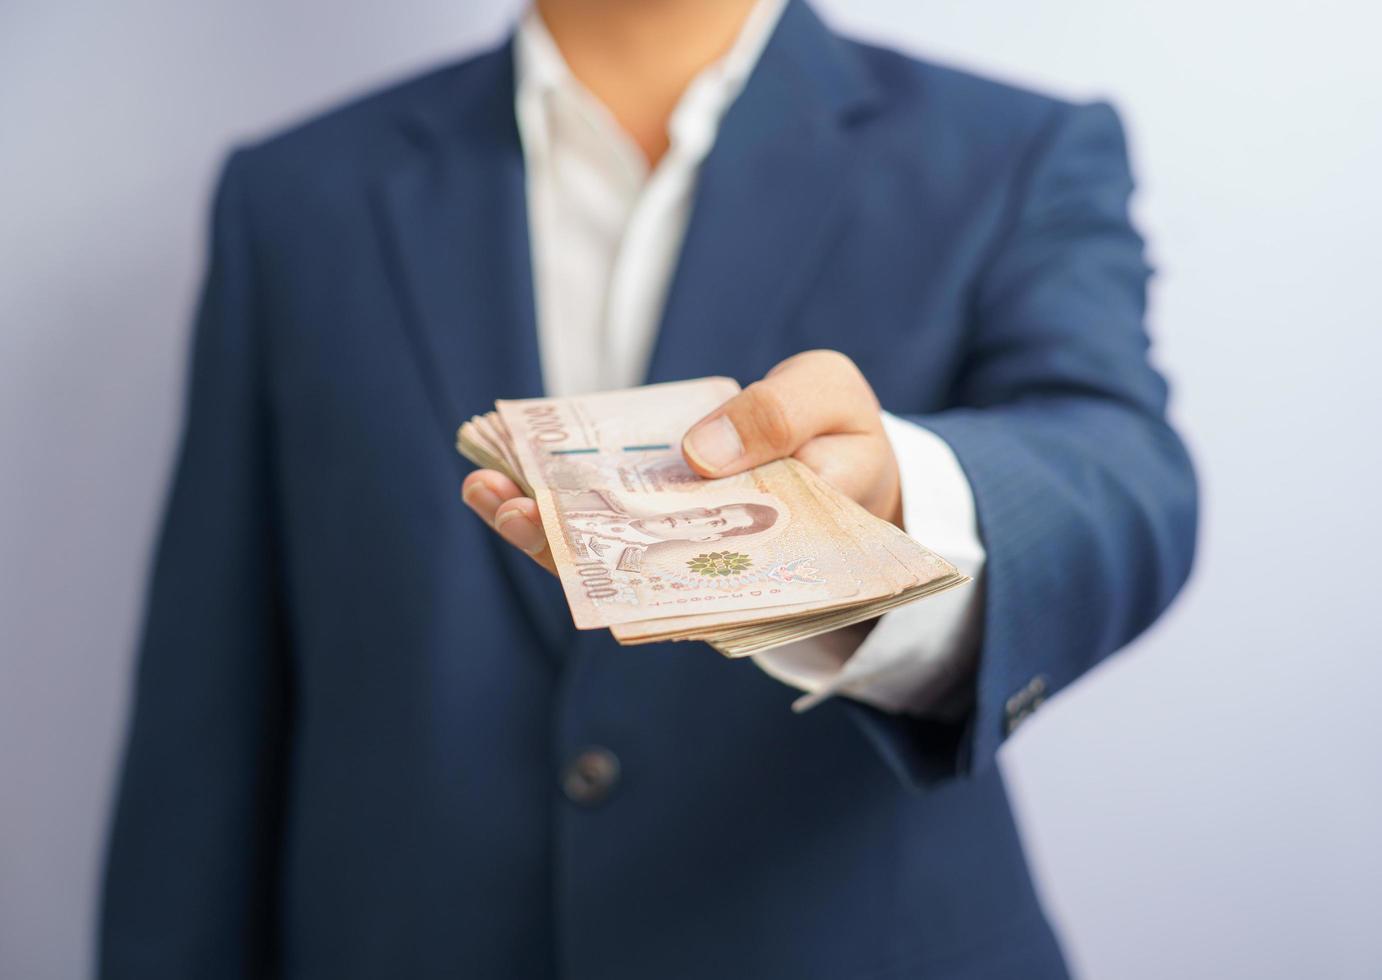 Thai money in a business man's hand photo